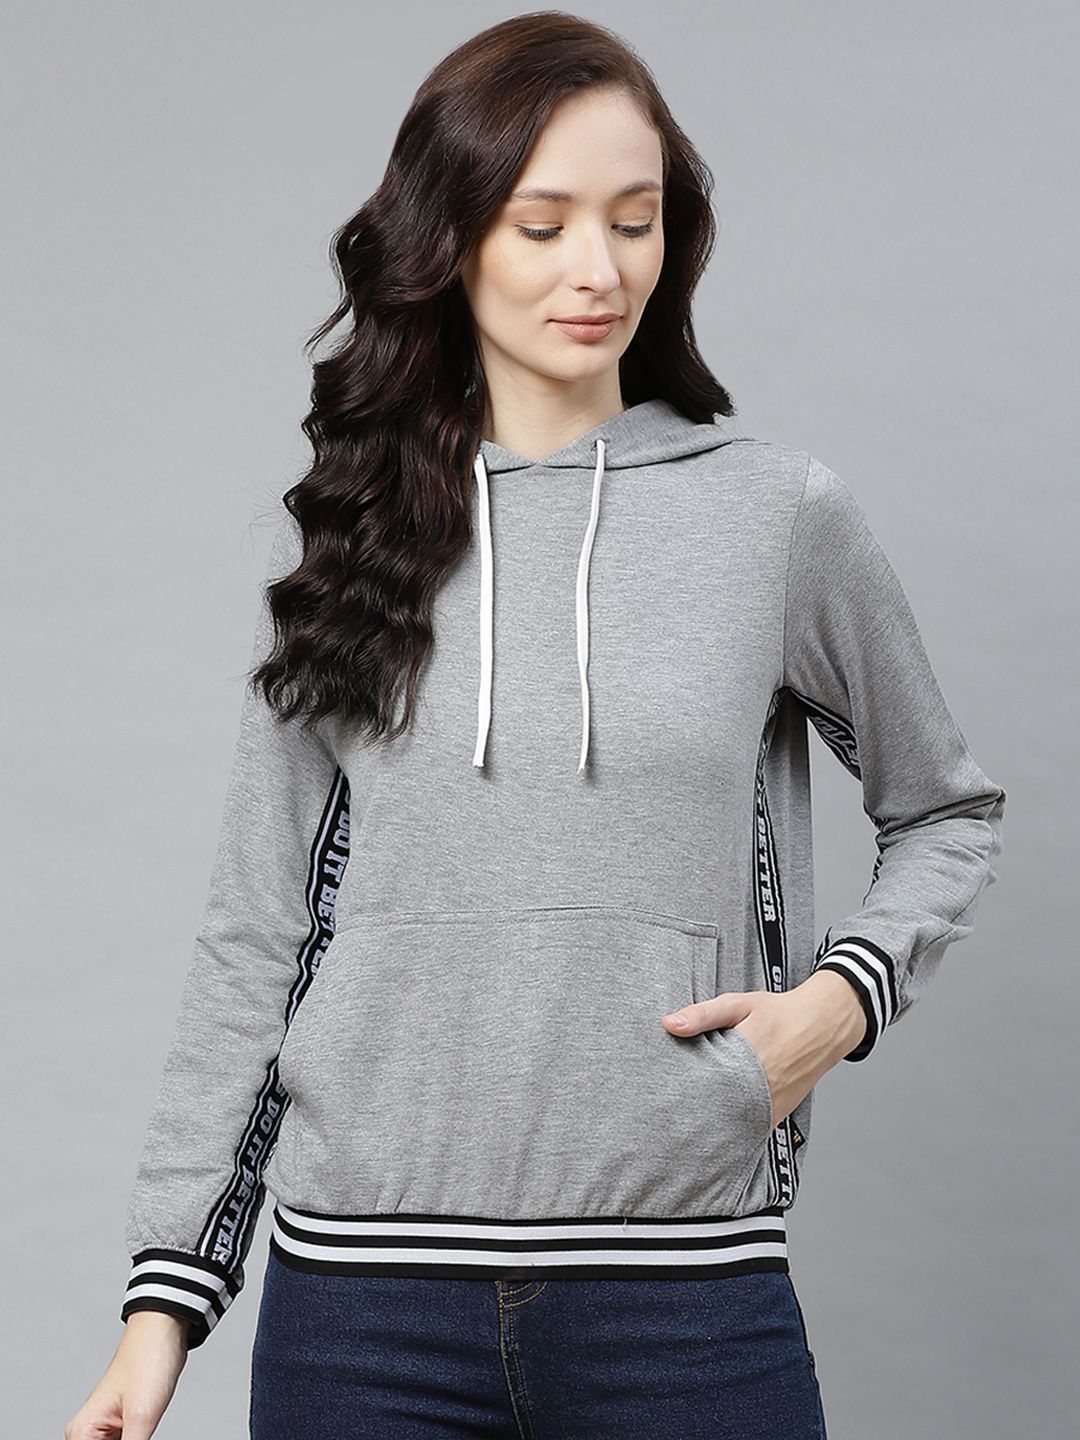 Hubberholme Women Grey Melange Solid Hooded Sweatshirt with Side Taping Detail Price in India